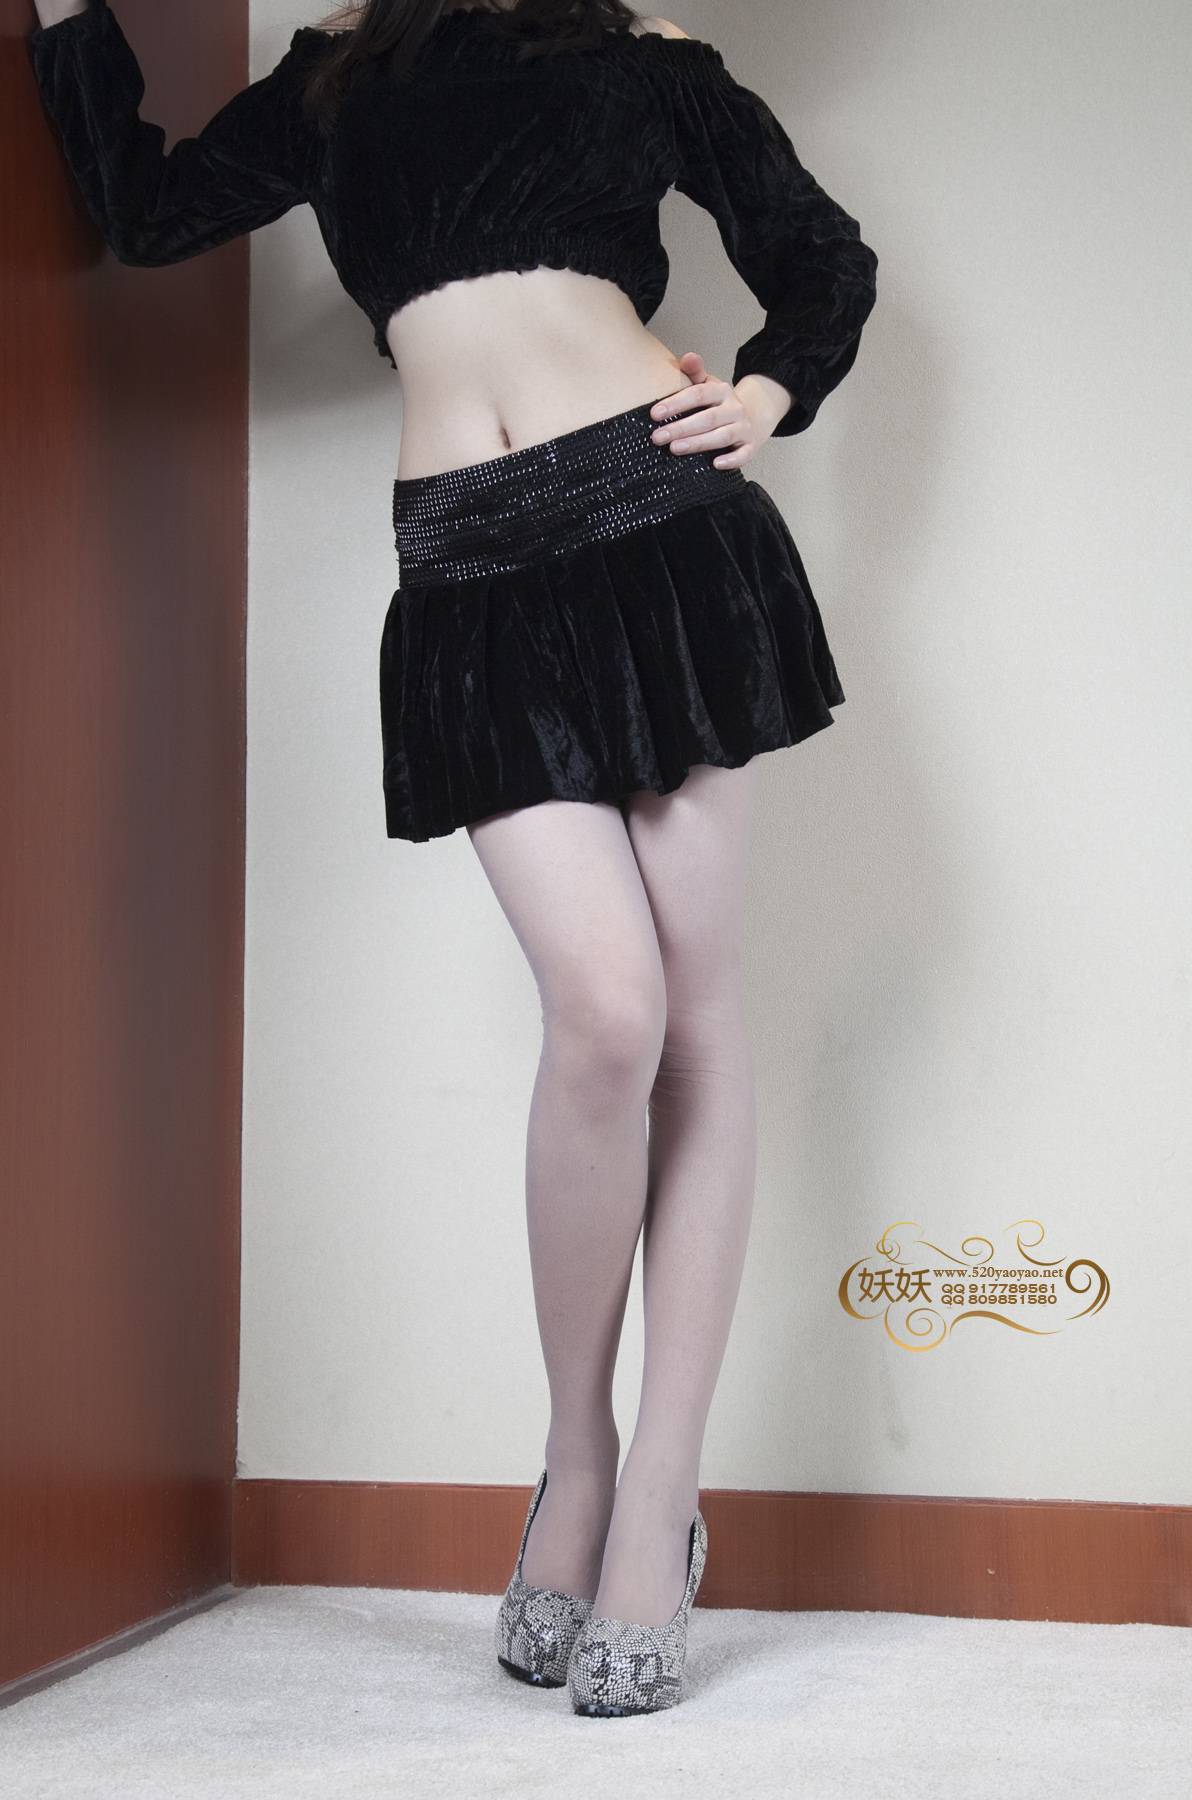 ROSI 20120229 no.226 anonymous photo alluring beautiful silk stockings set